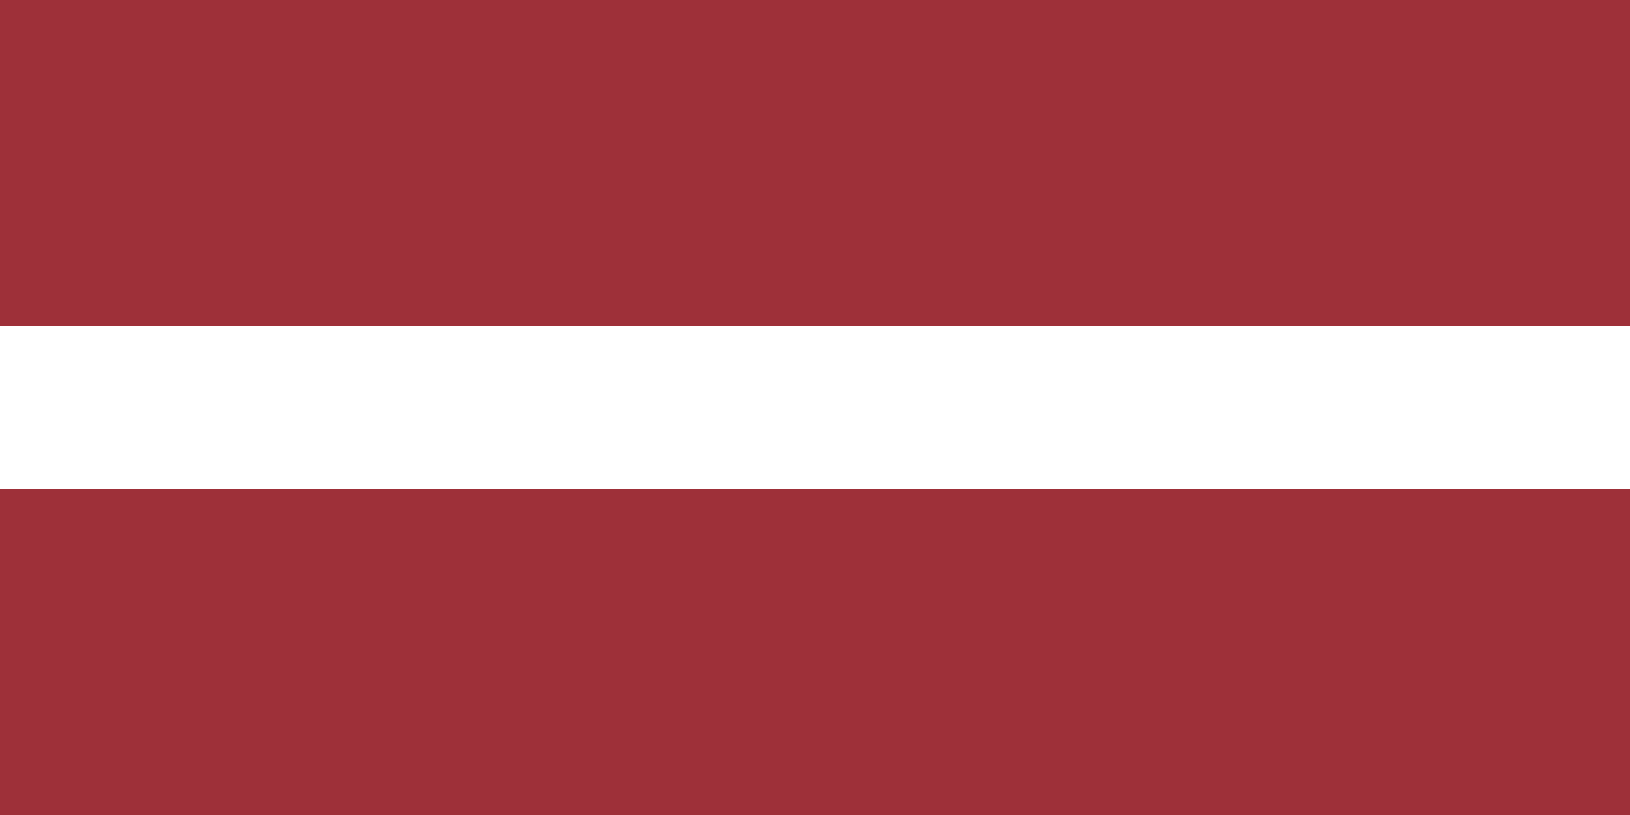 Podoba nacionalno zastavo države Latvija v resoluciji 1630x815